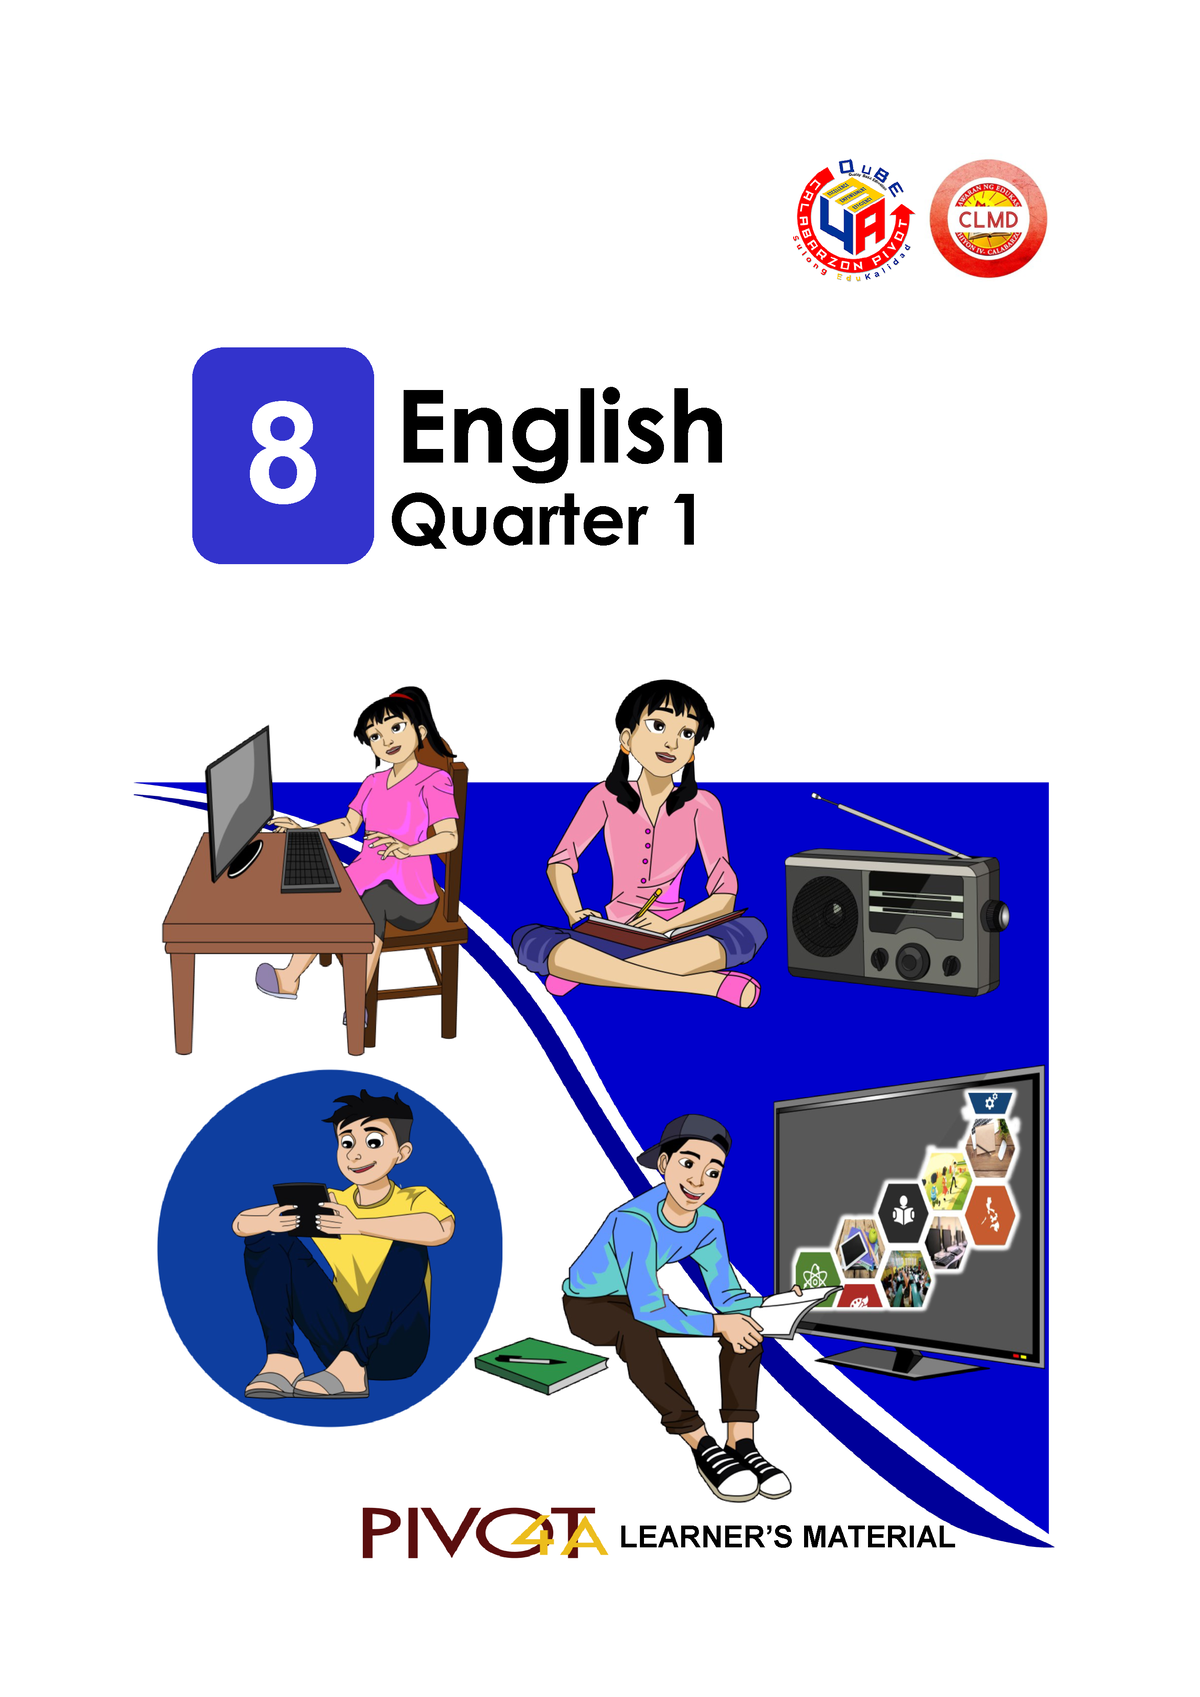 english-8-quarter-1-pivot-4-a-8-english-quarter-1-learner-s-material